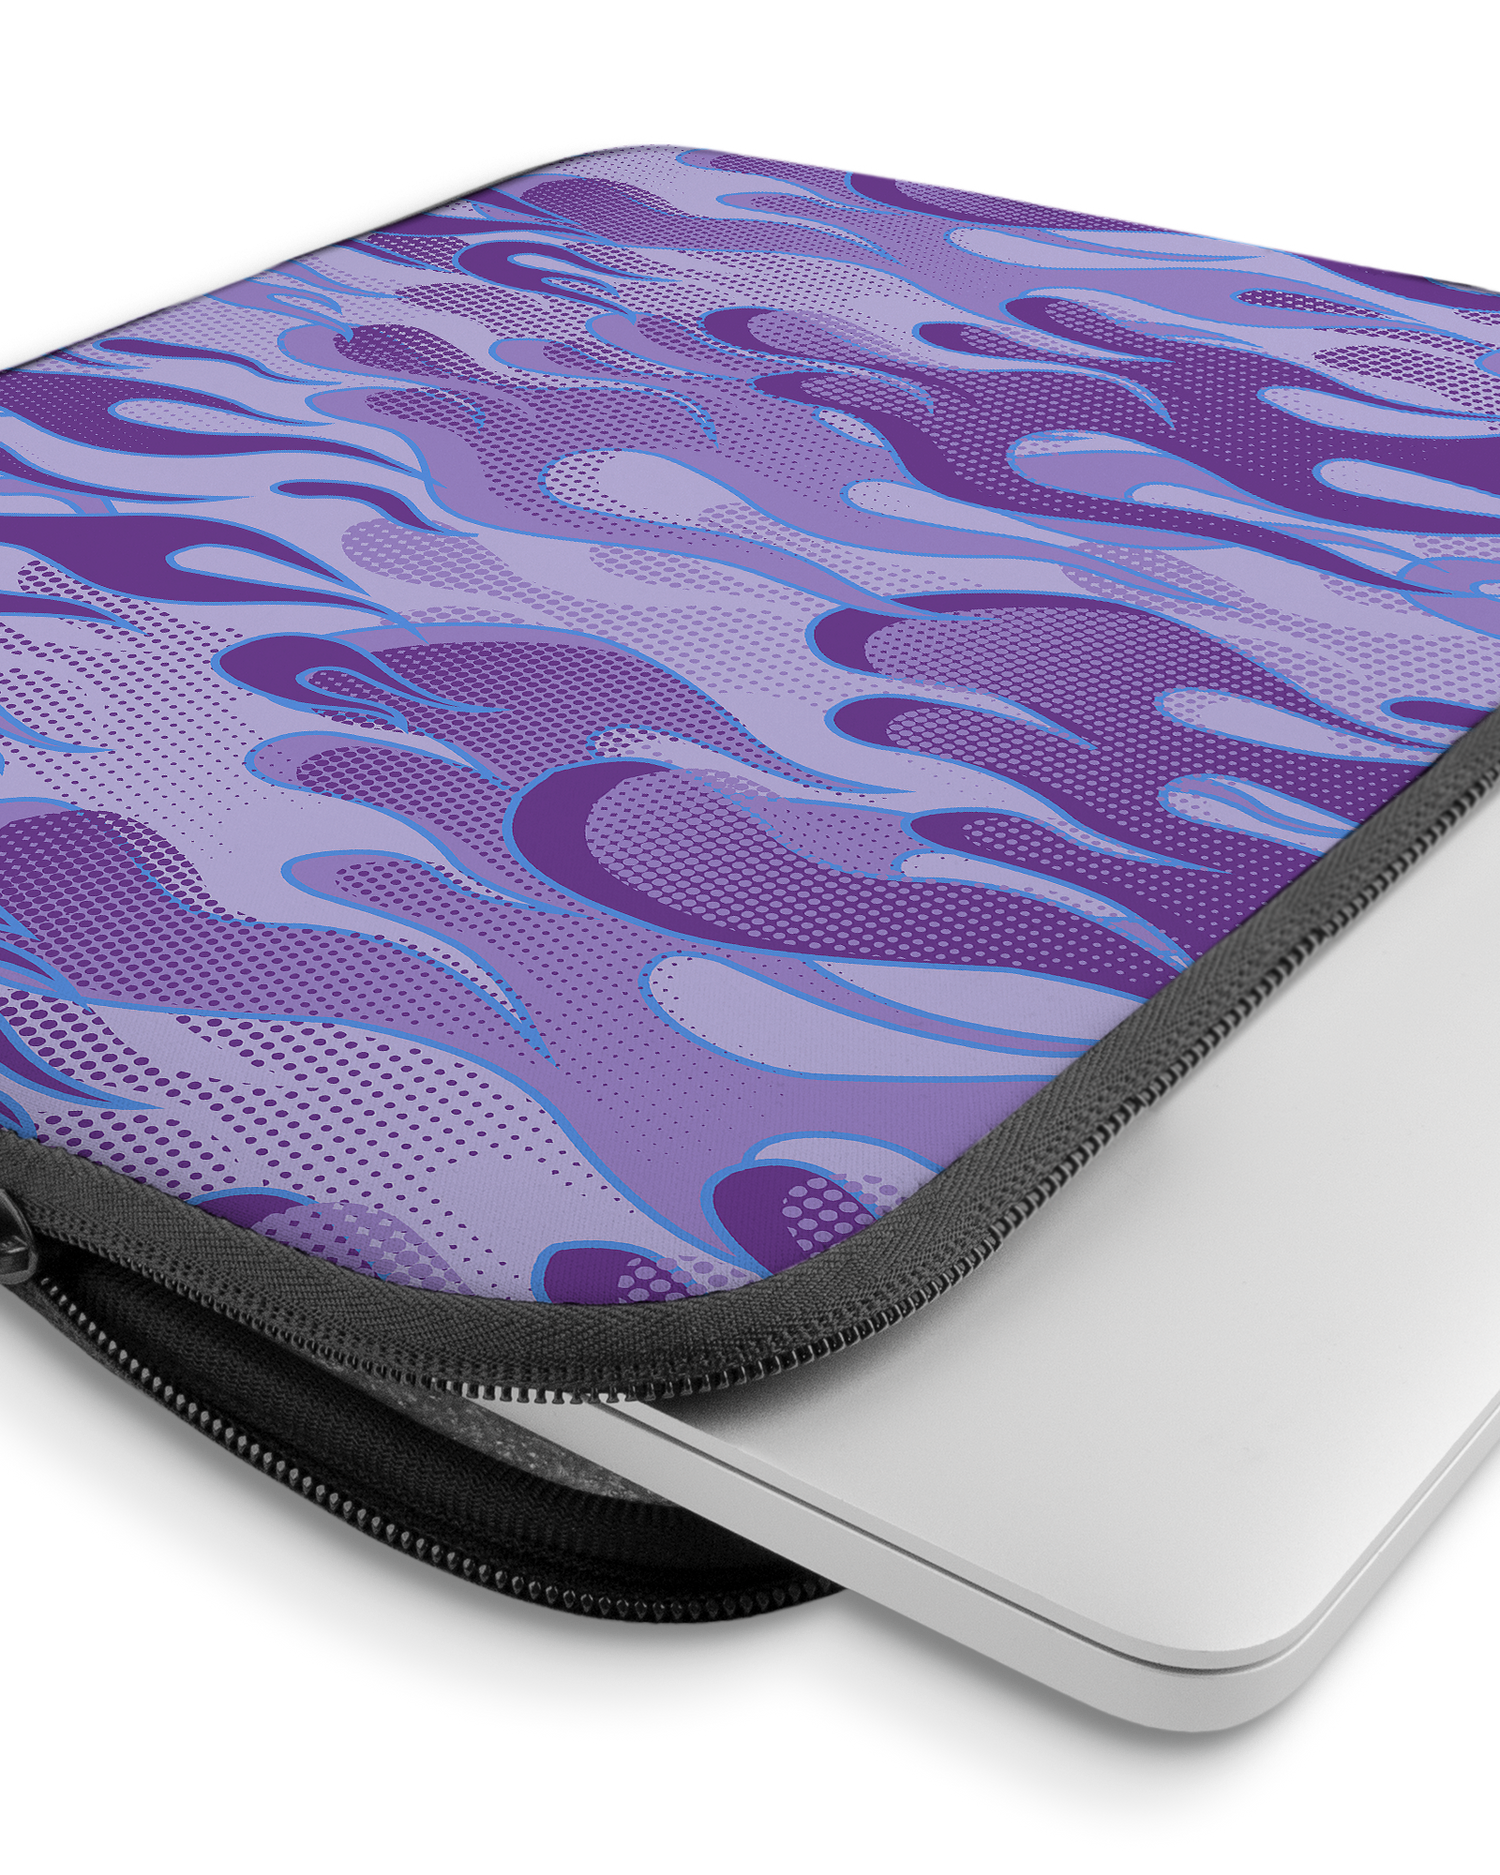 Purple Flames Laptophülle 15 Zoll mit Gerät im Inneren